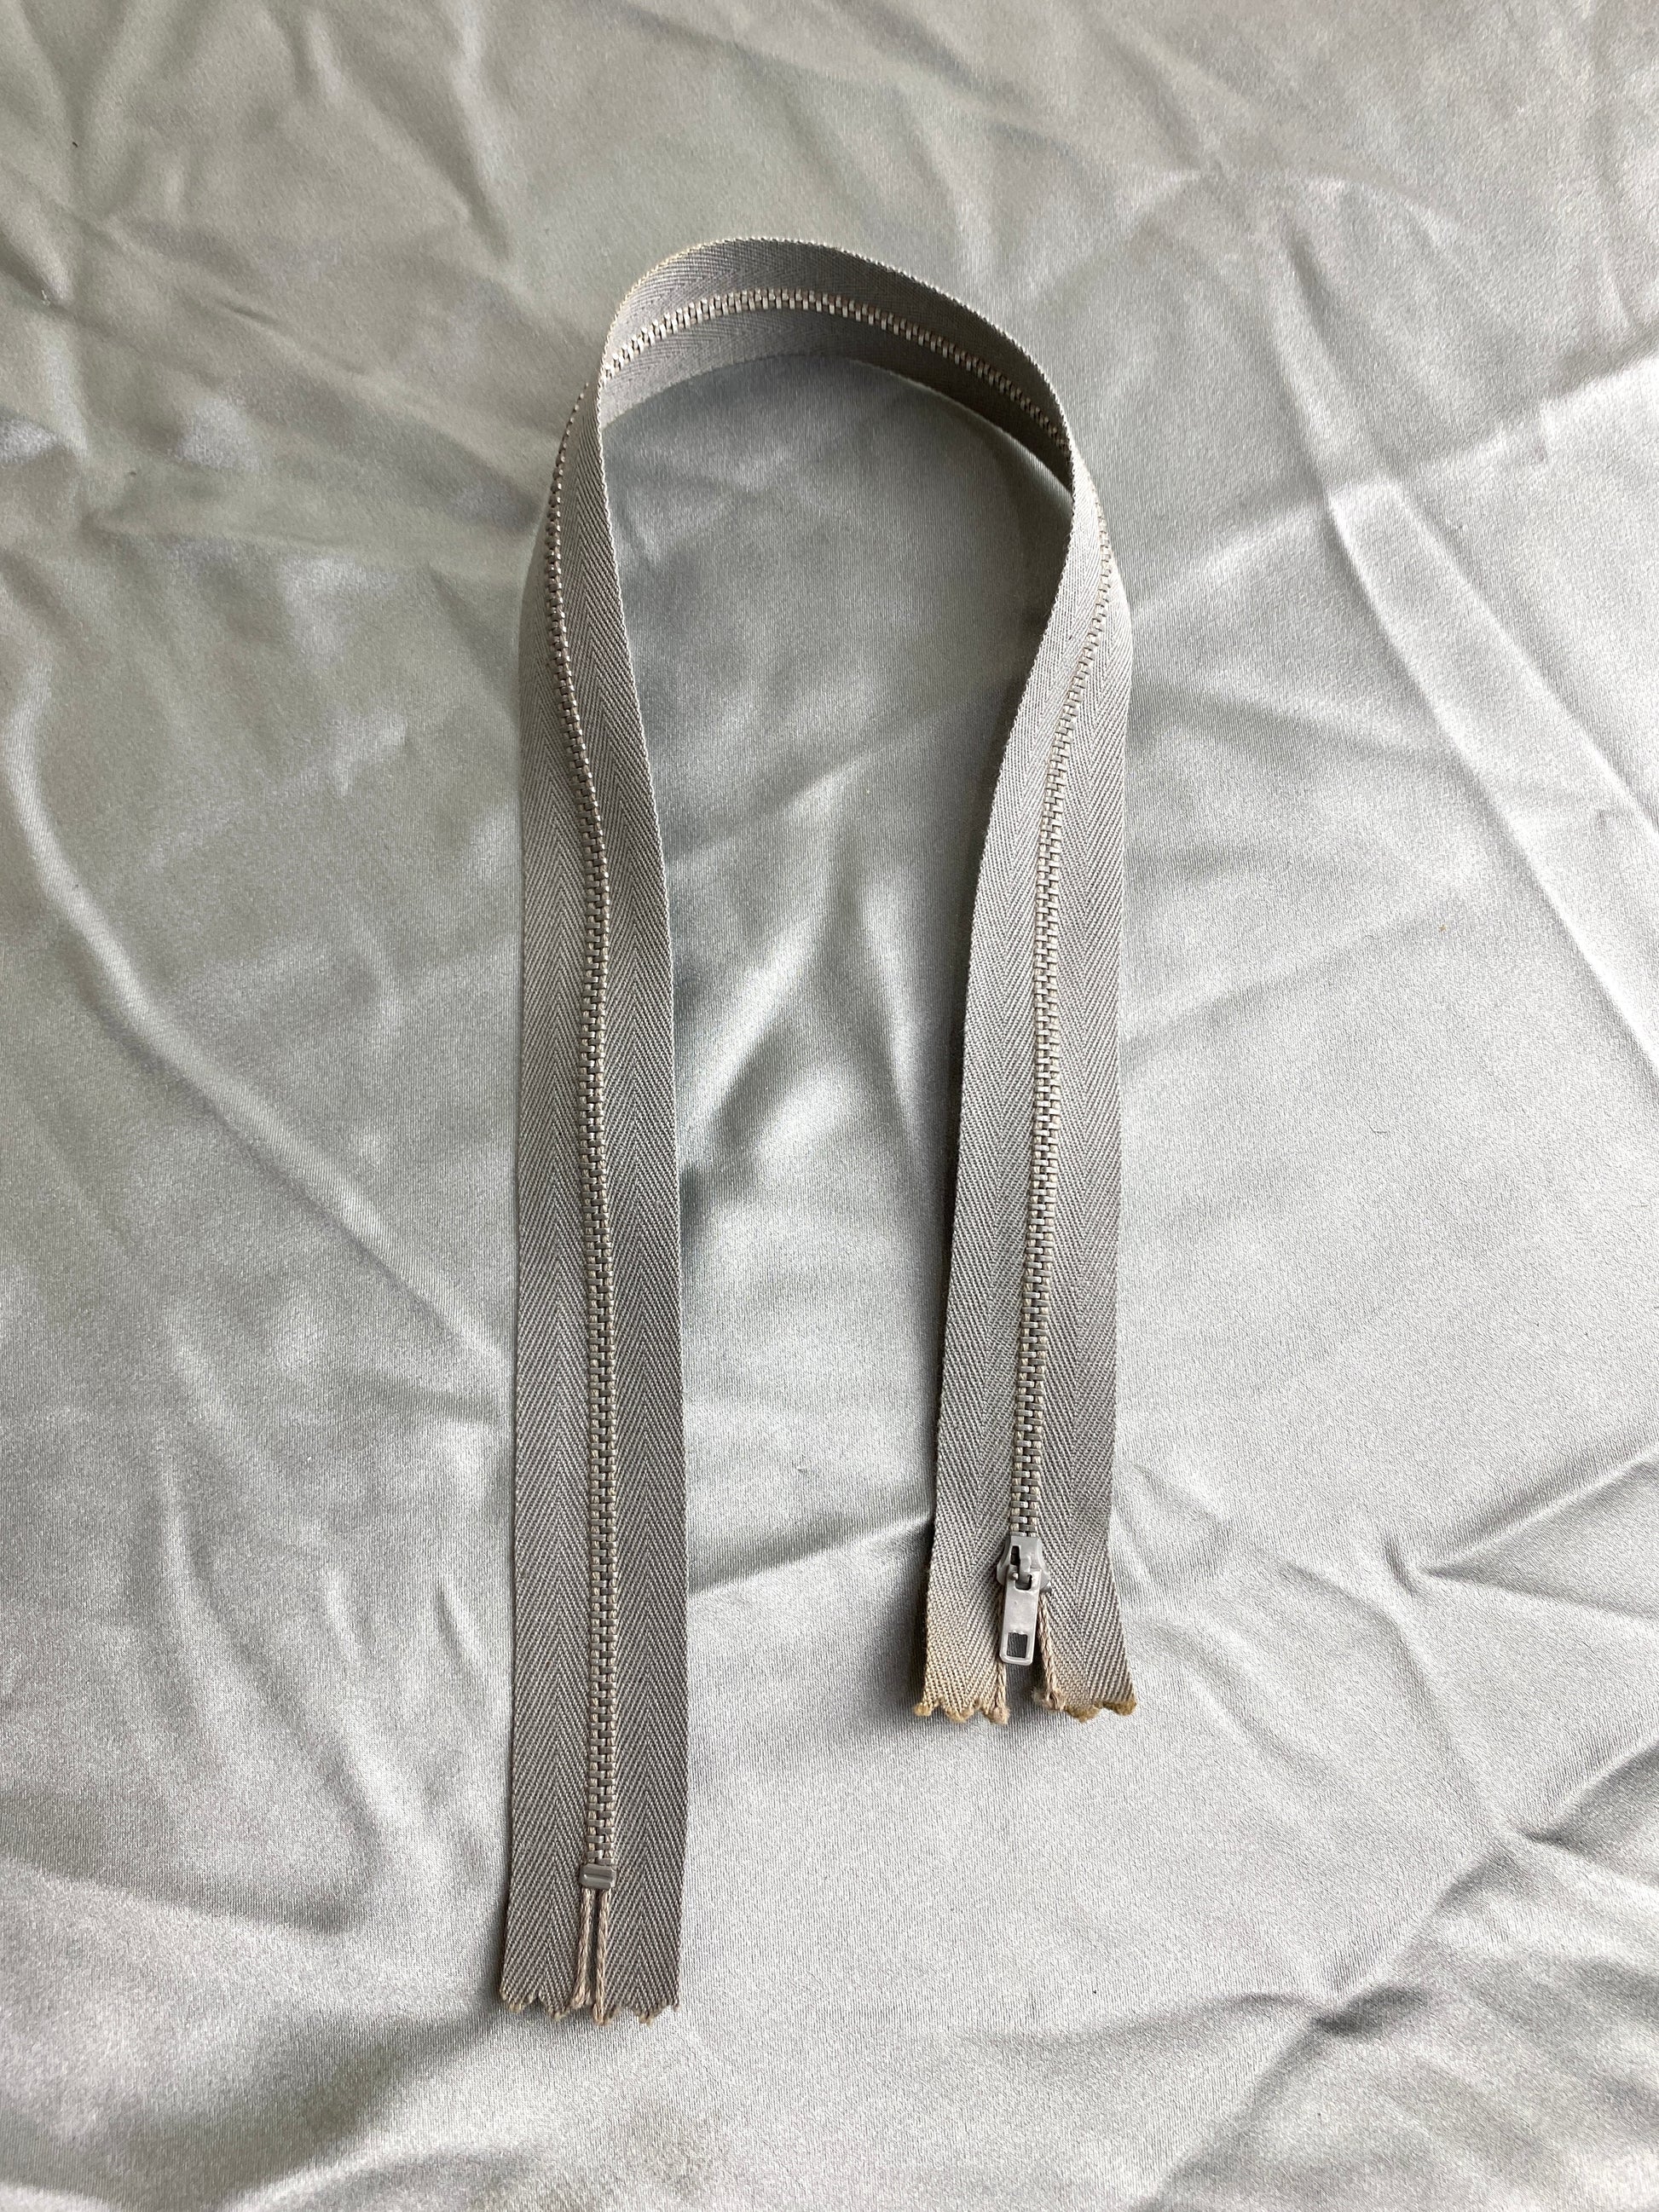 A single light grey zipper. Ian Drummond Vintage. 